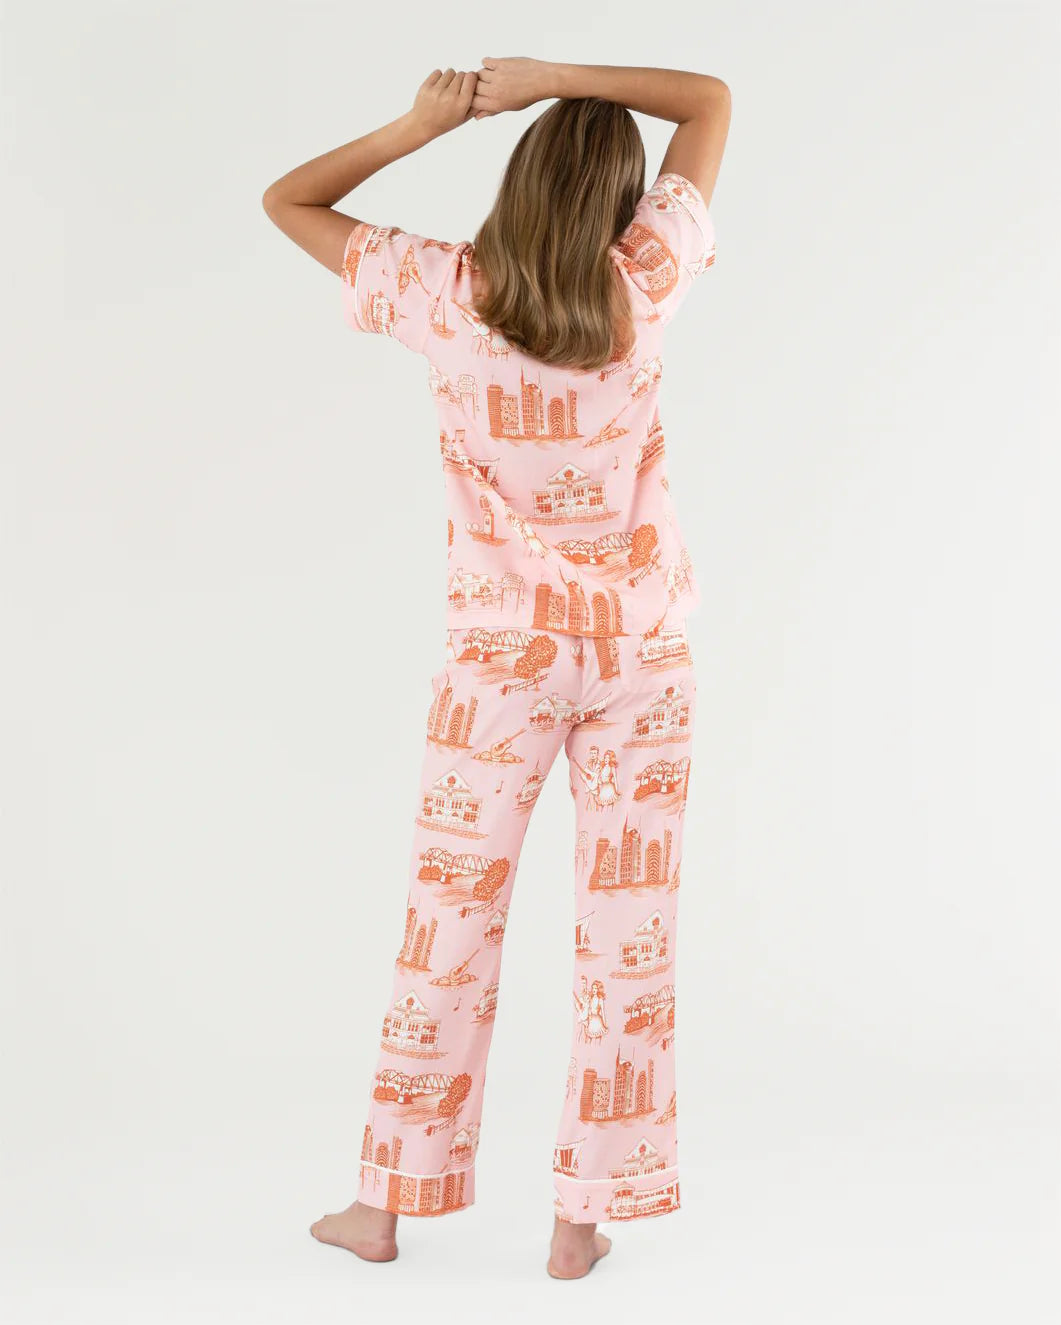 Nashville Toile Pajama-Pink